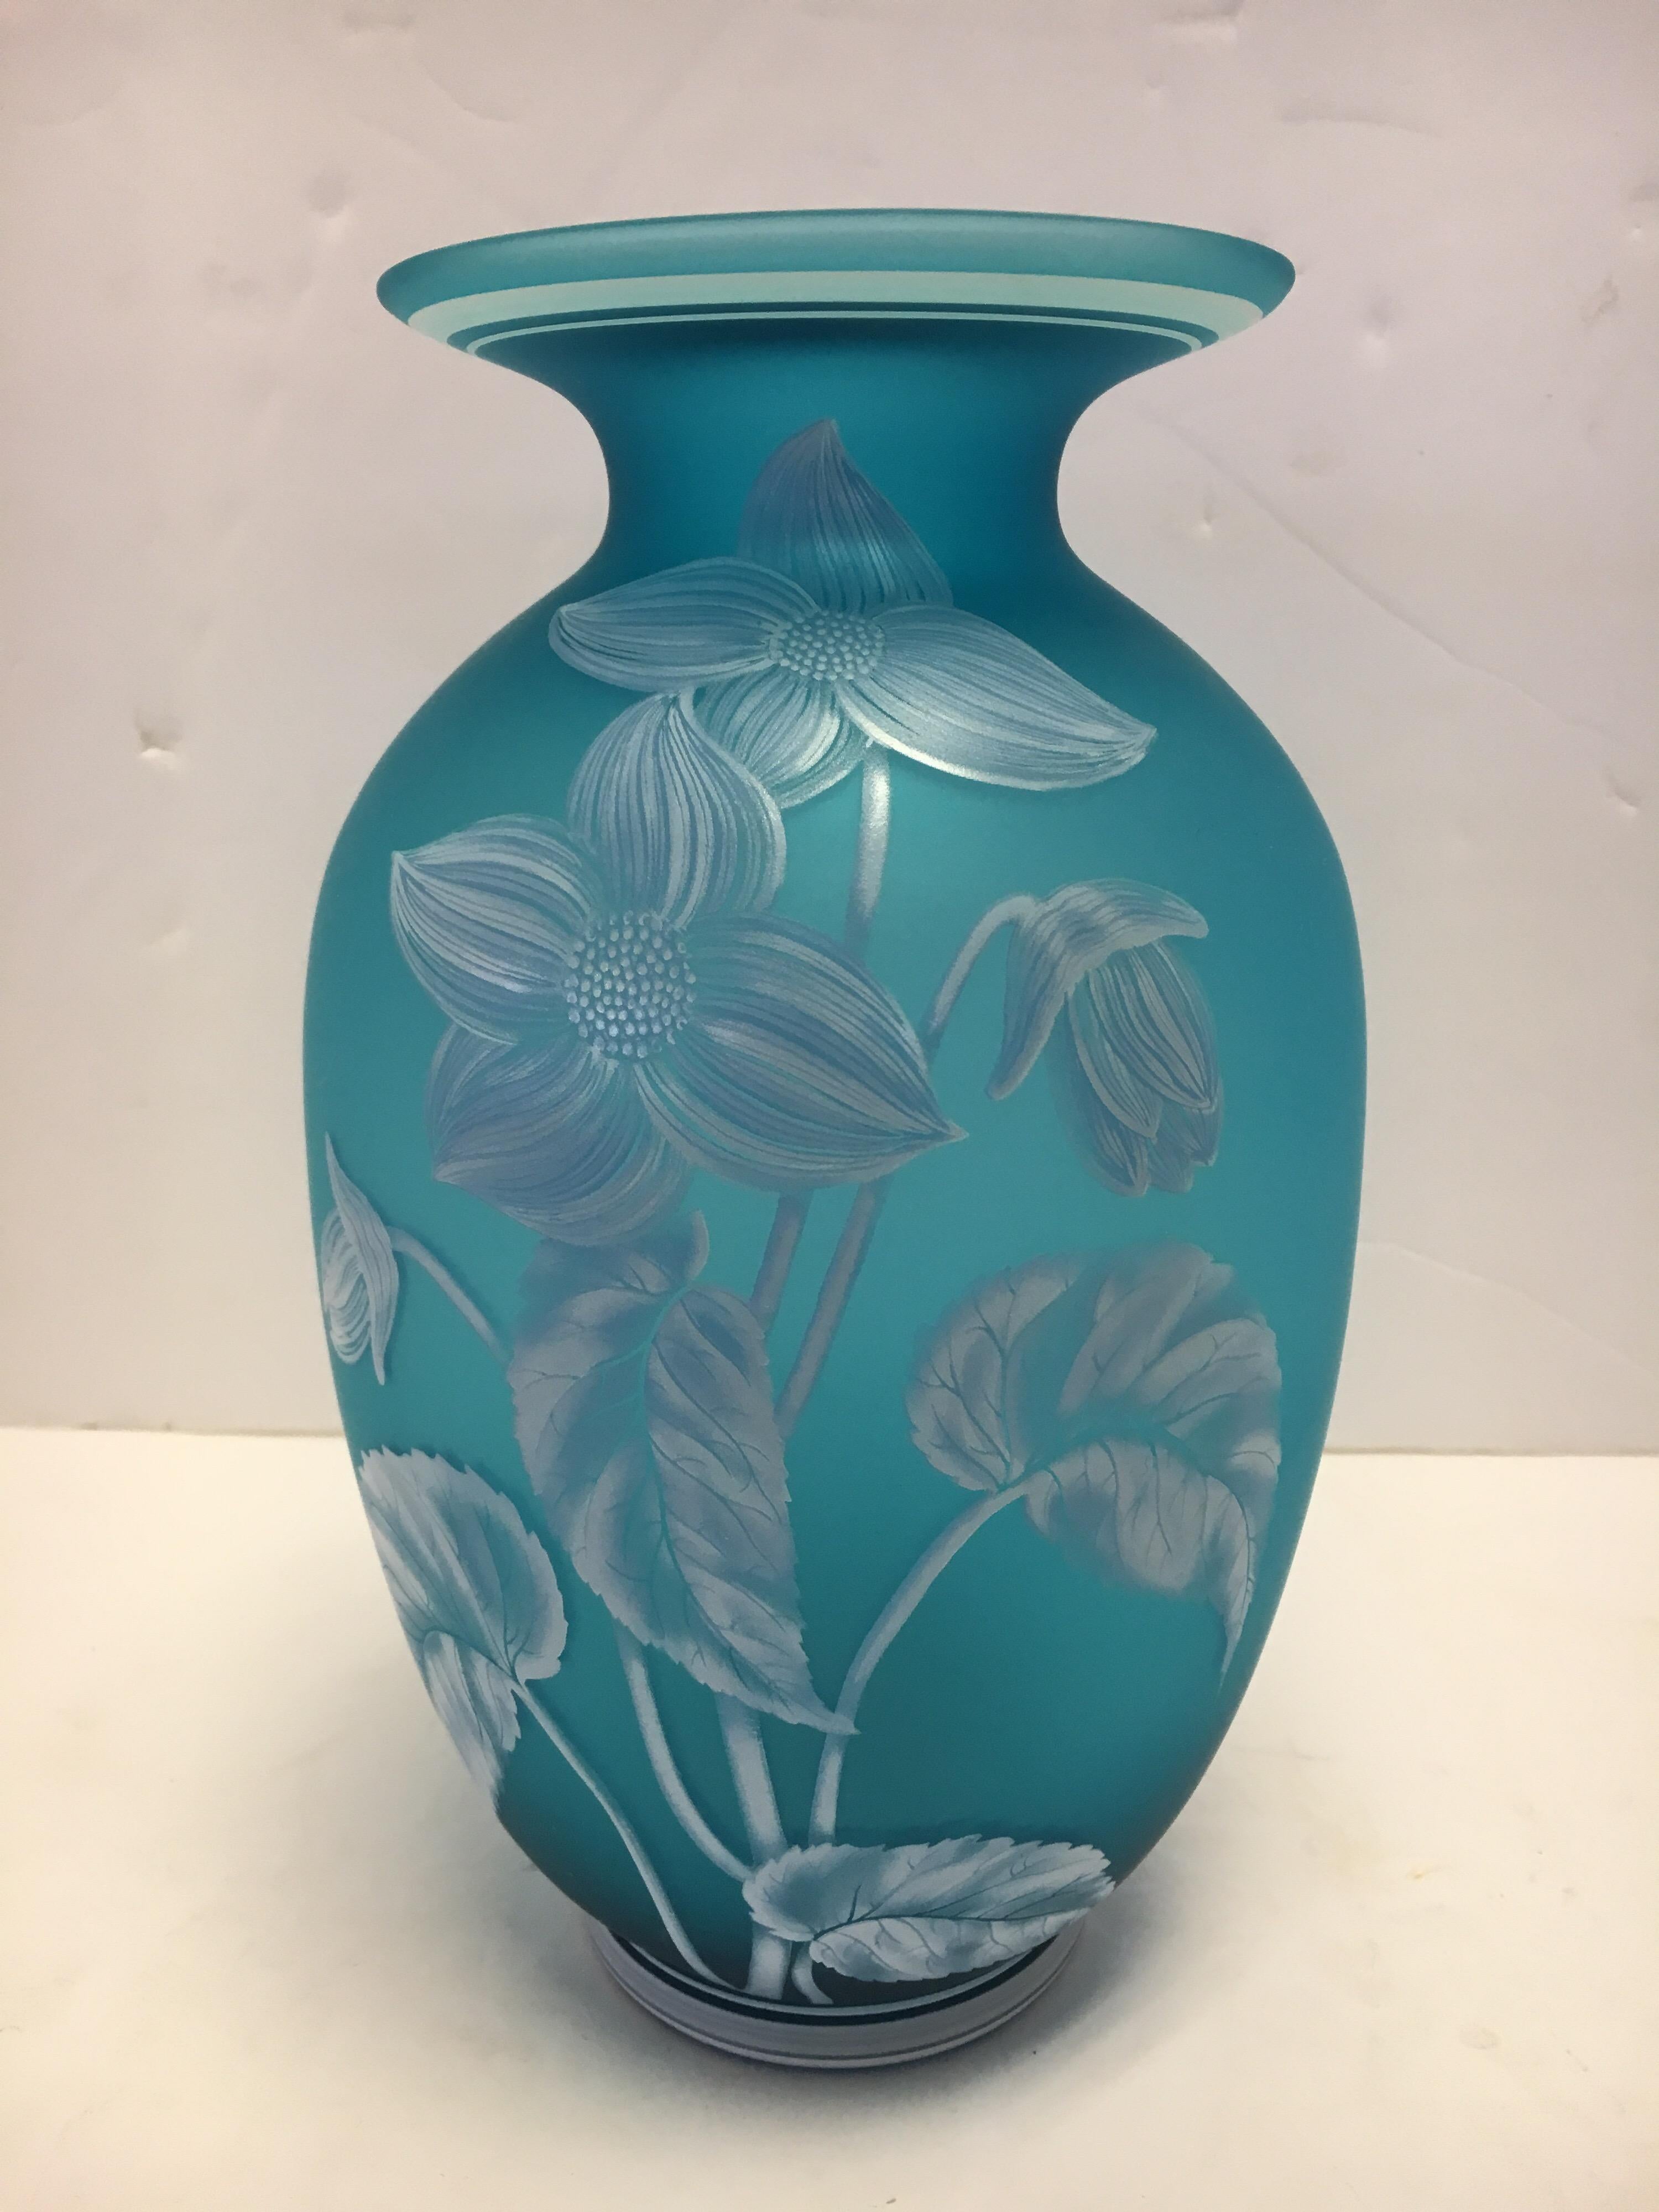 Lovely Fenton art glass vase that measures nine inches tall.